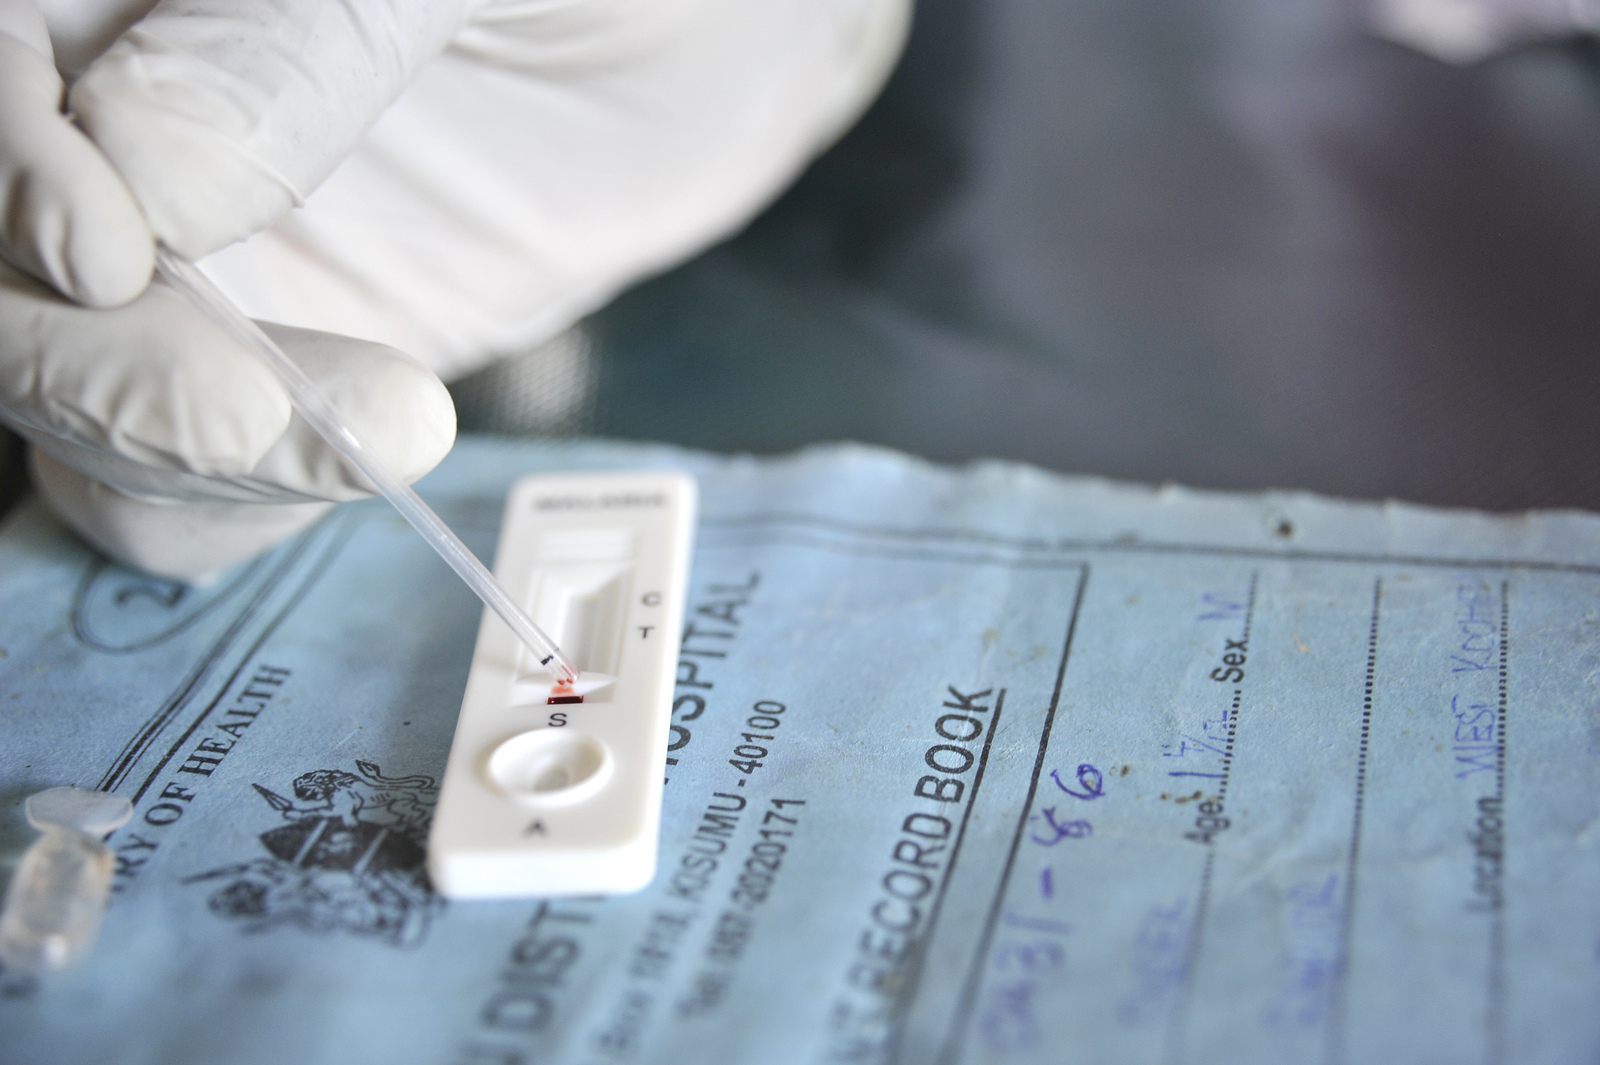 Malaria blood samples